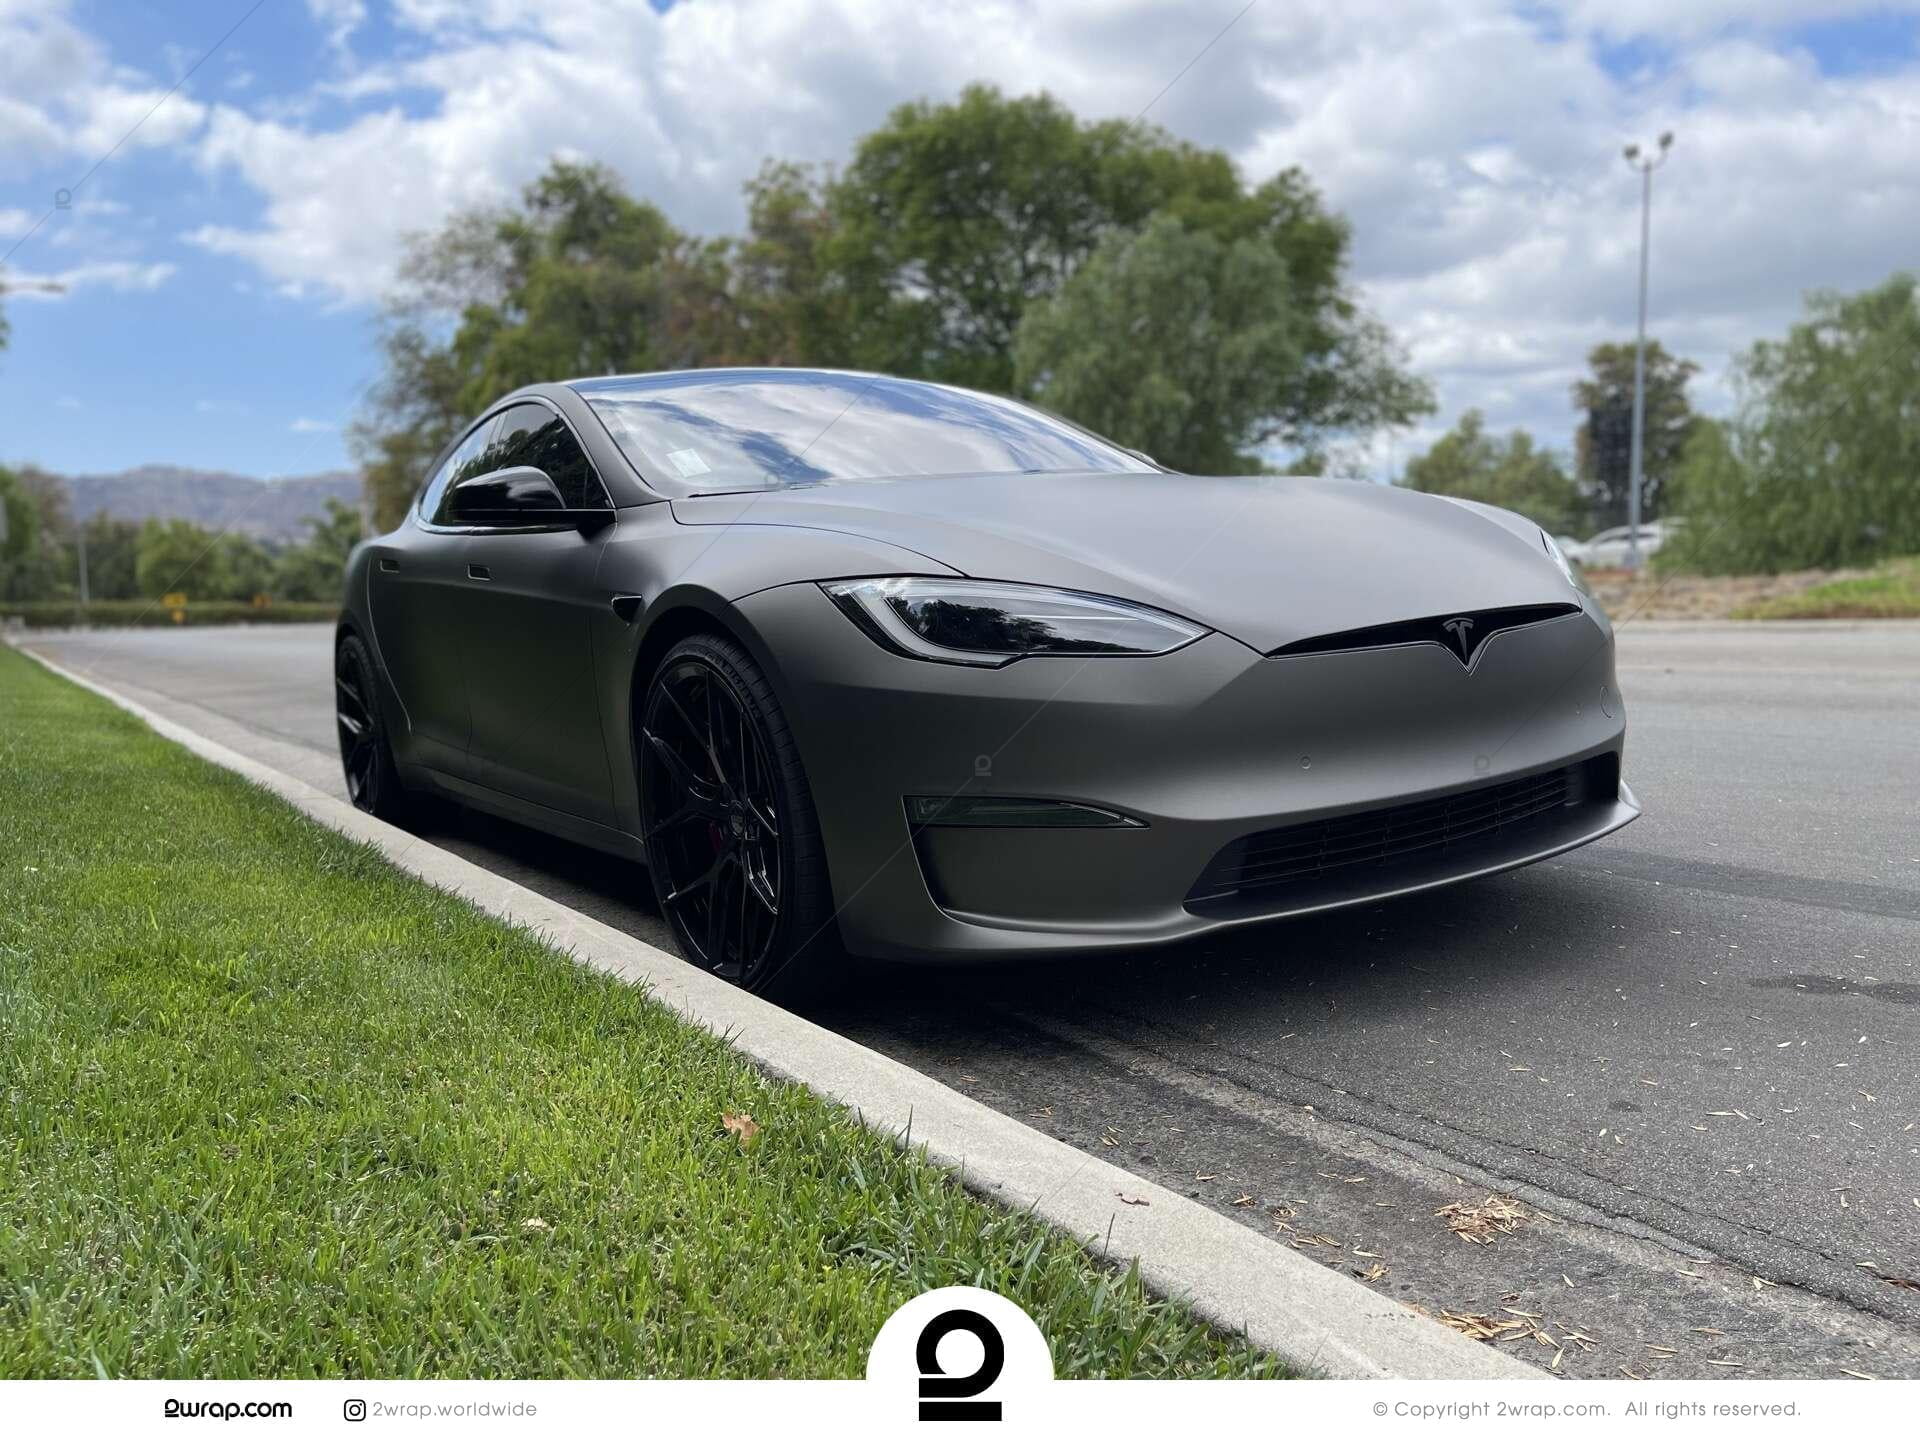 Tesla Model S matte charcoal grey by